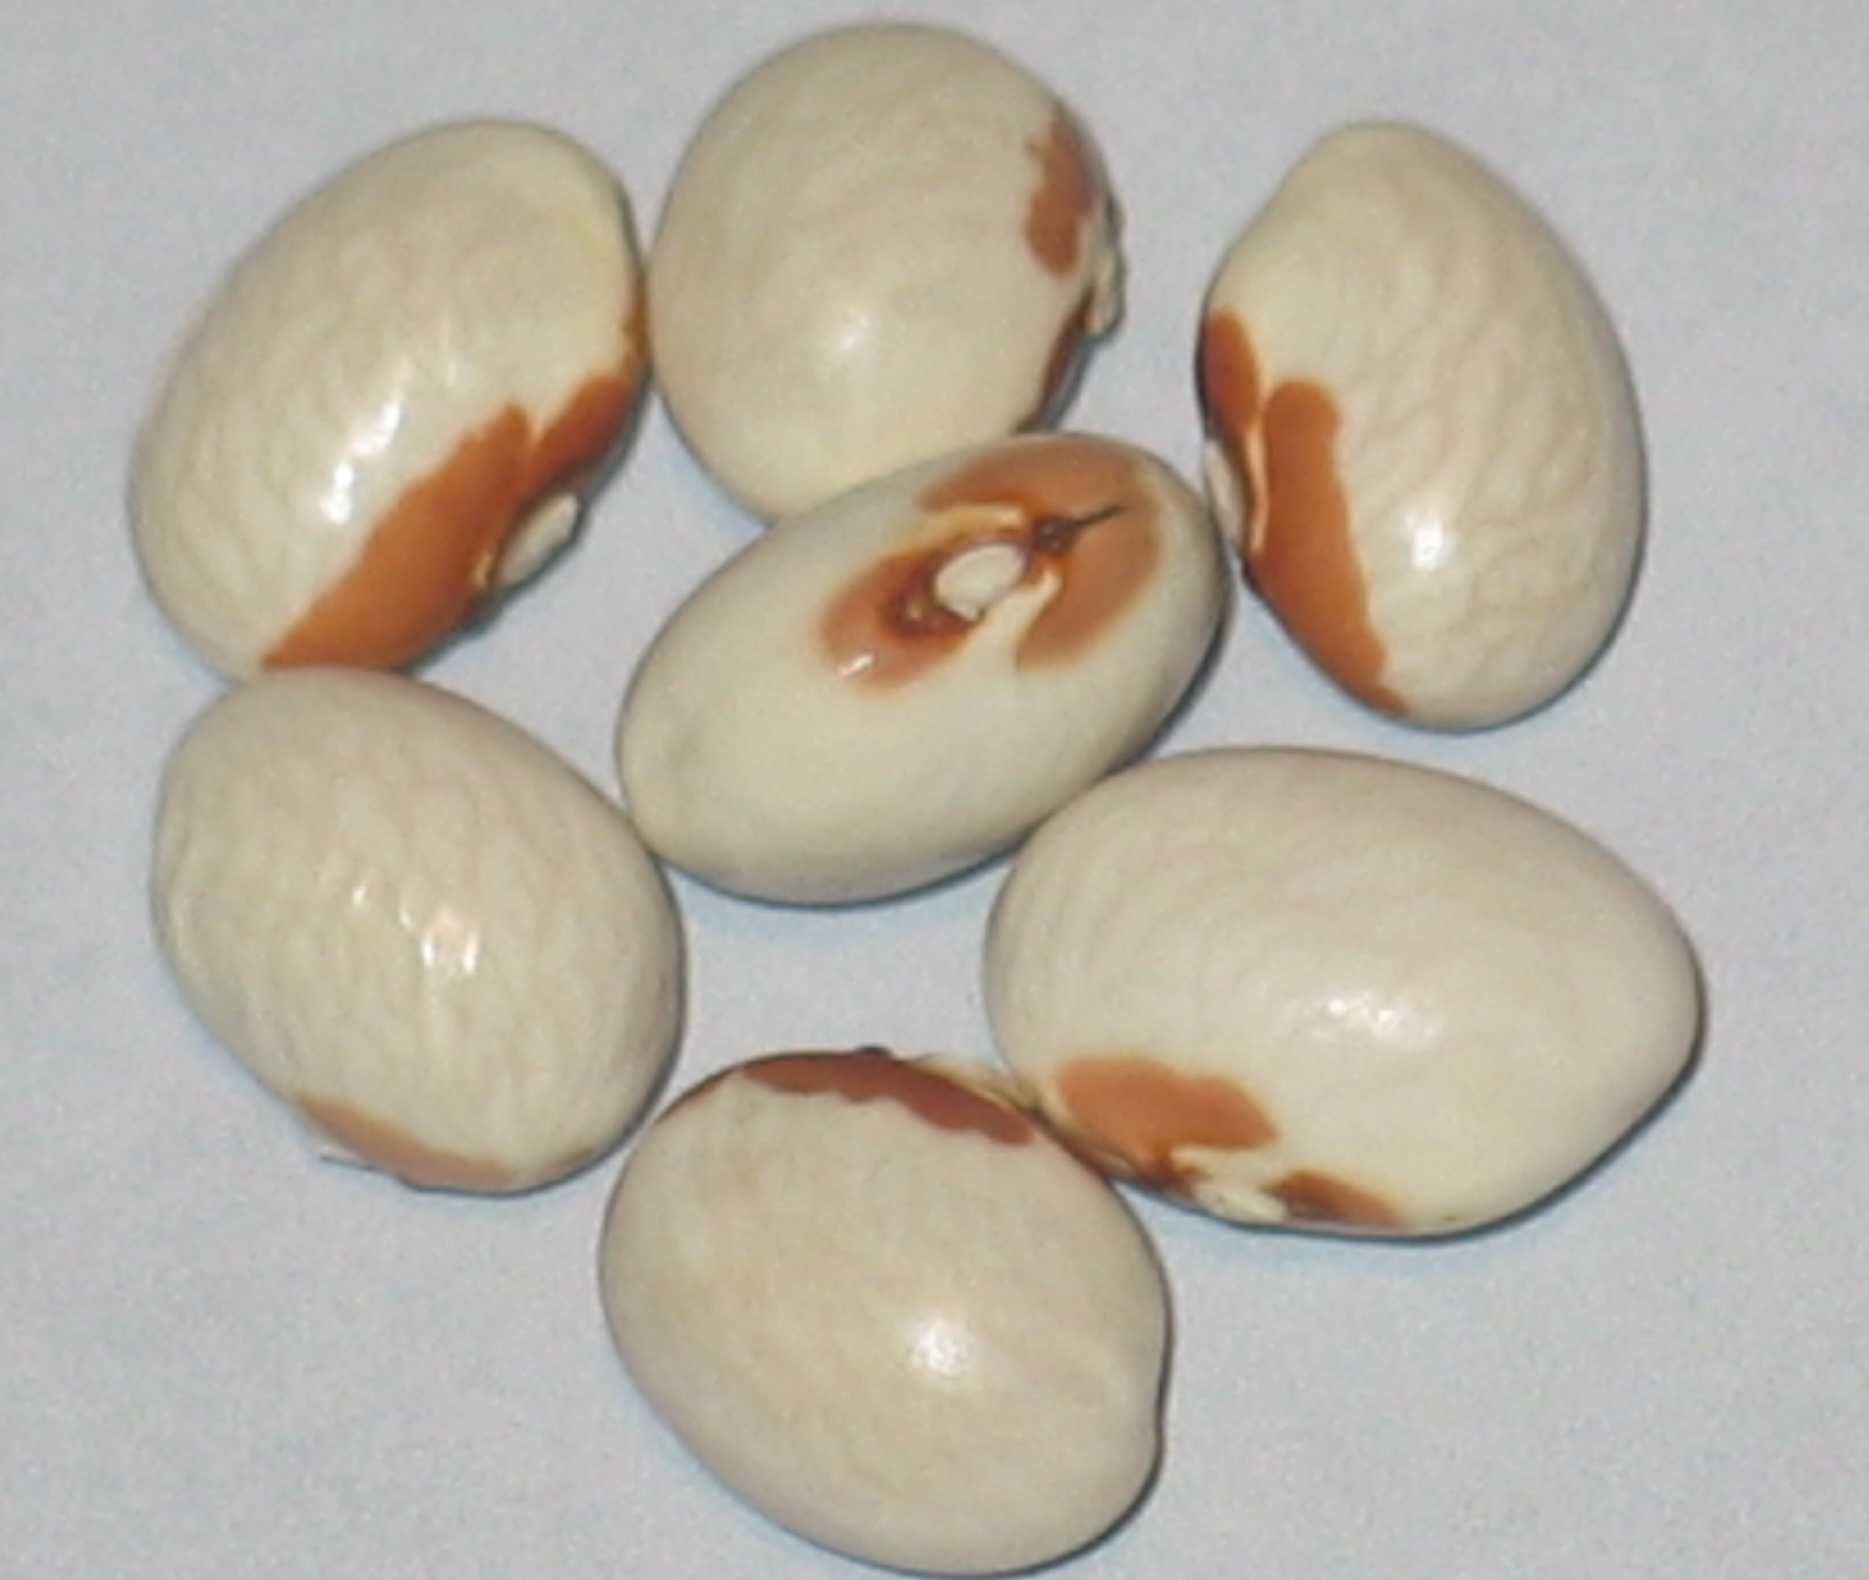 image of Badda Di Polizzi Blanca beans